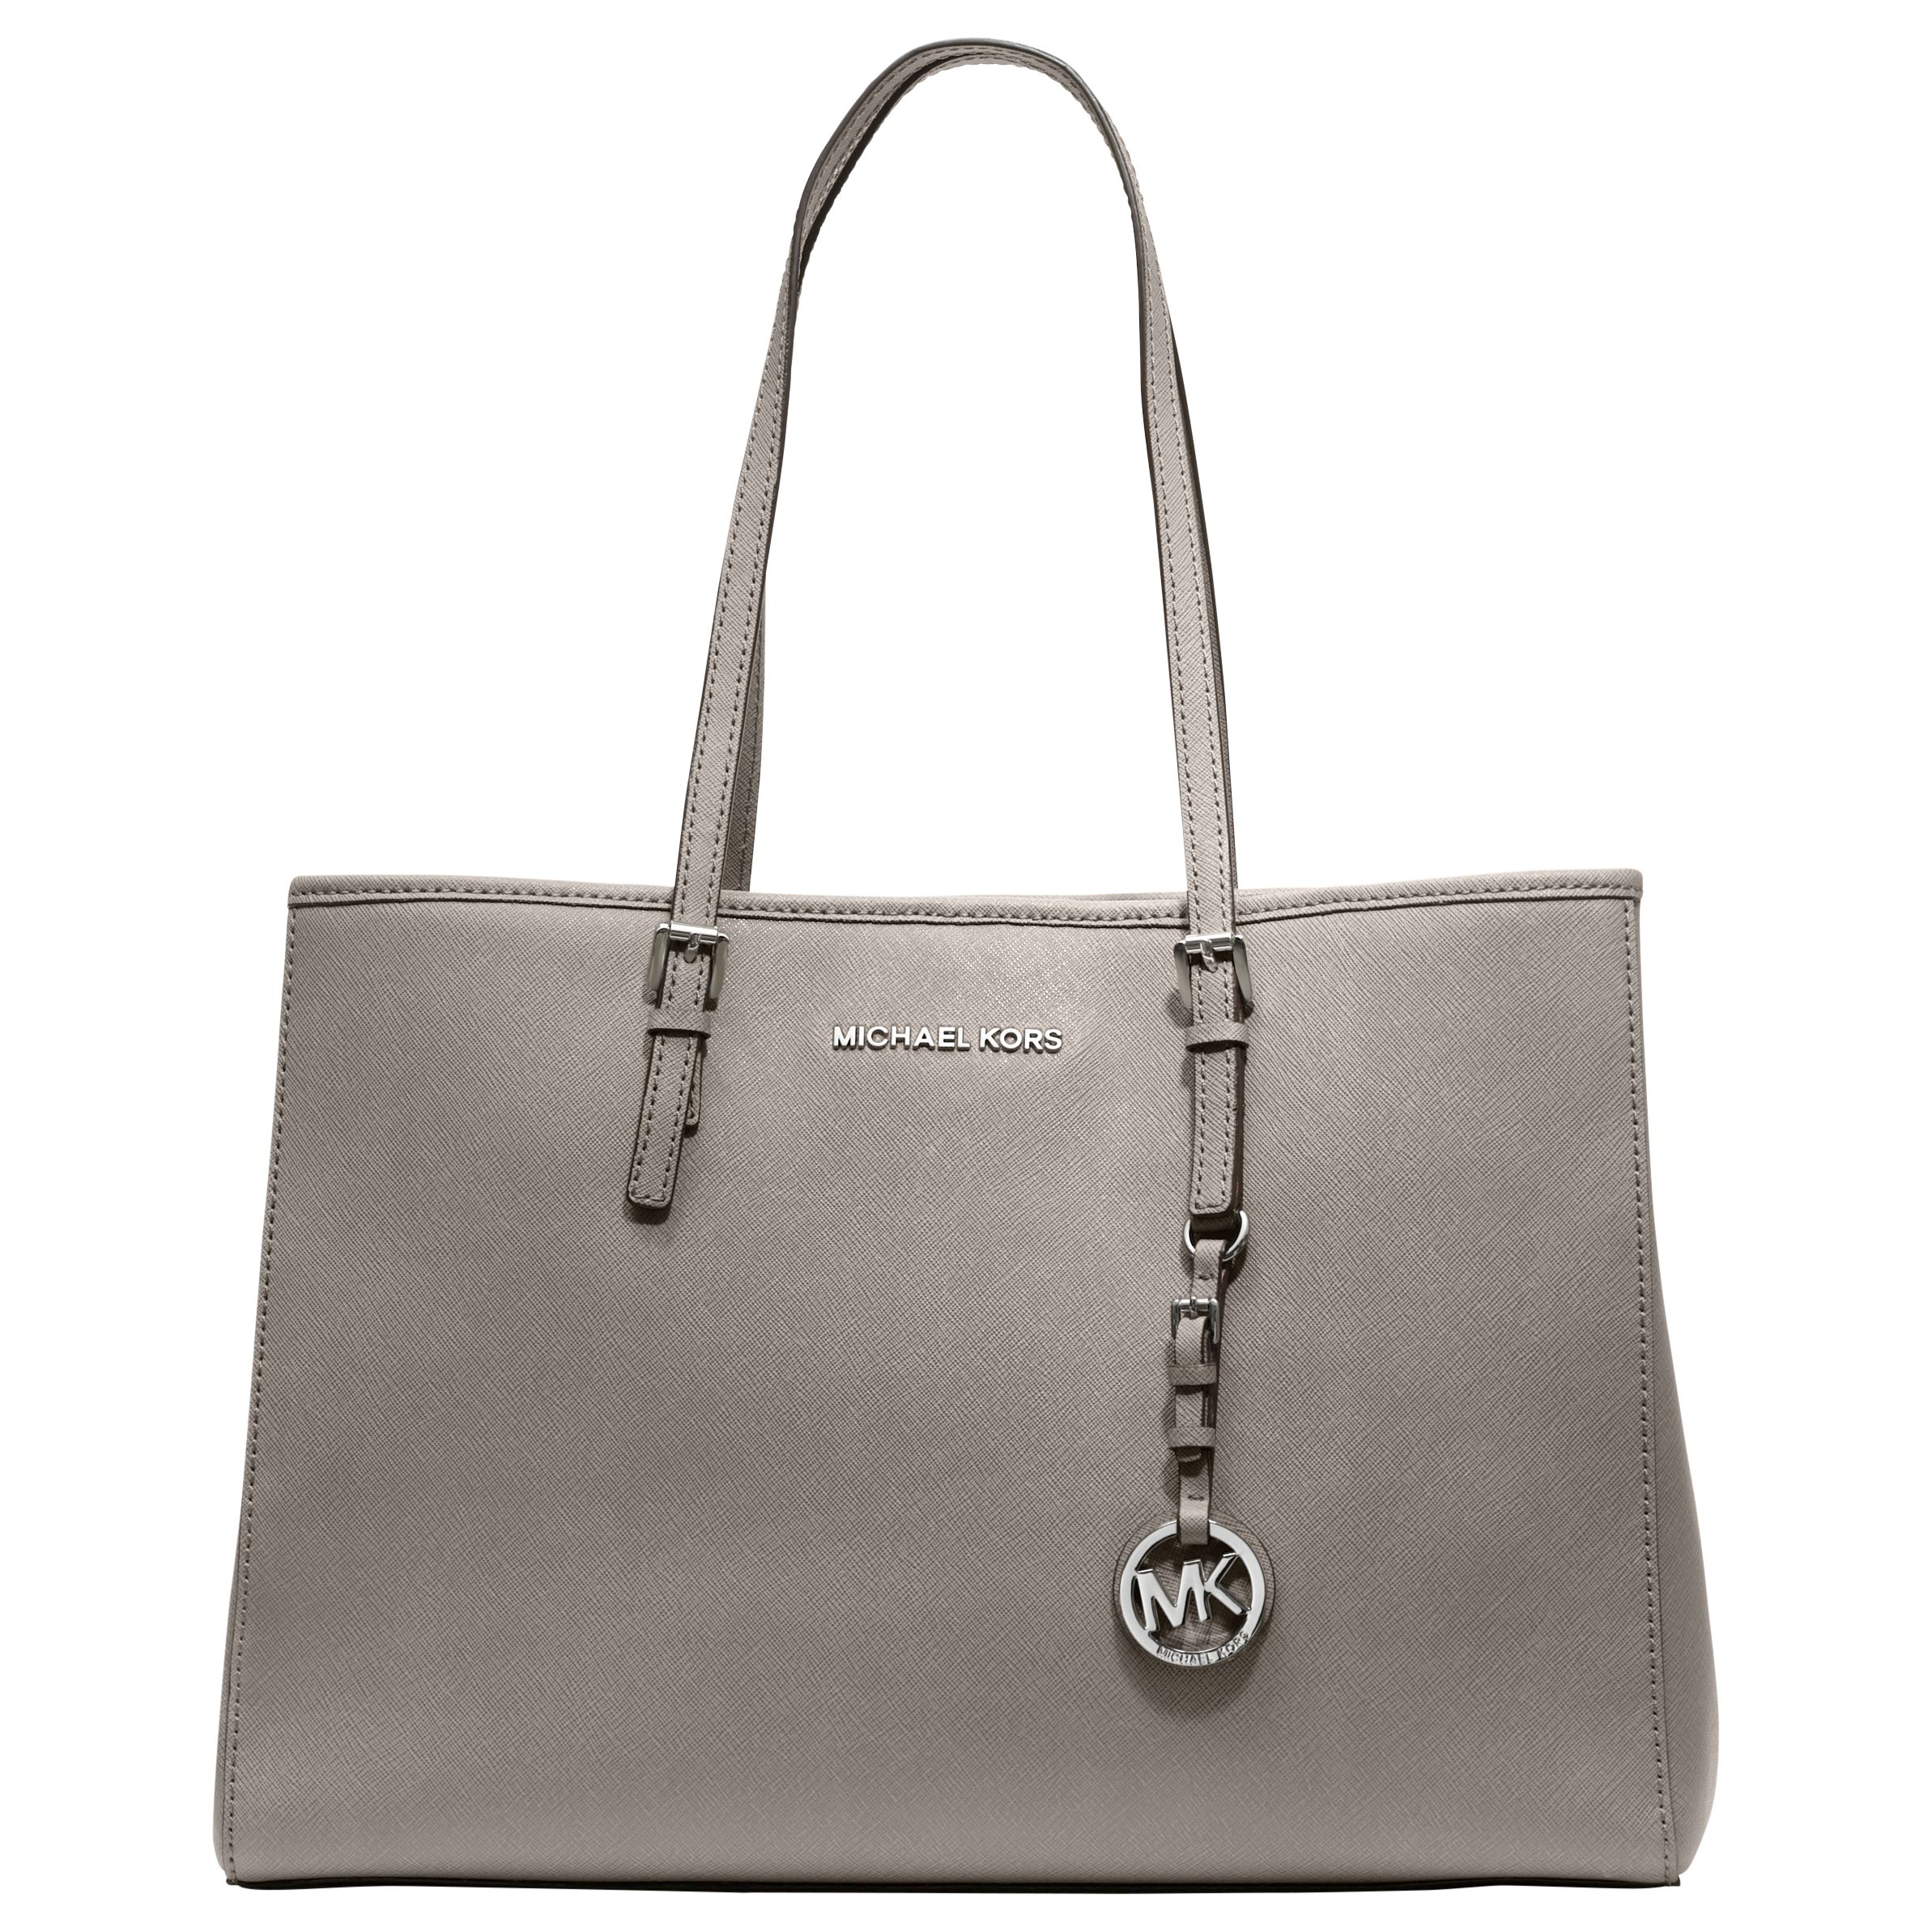 michael kors grey purse